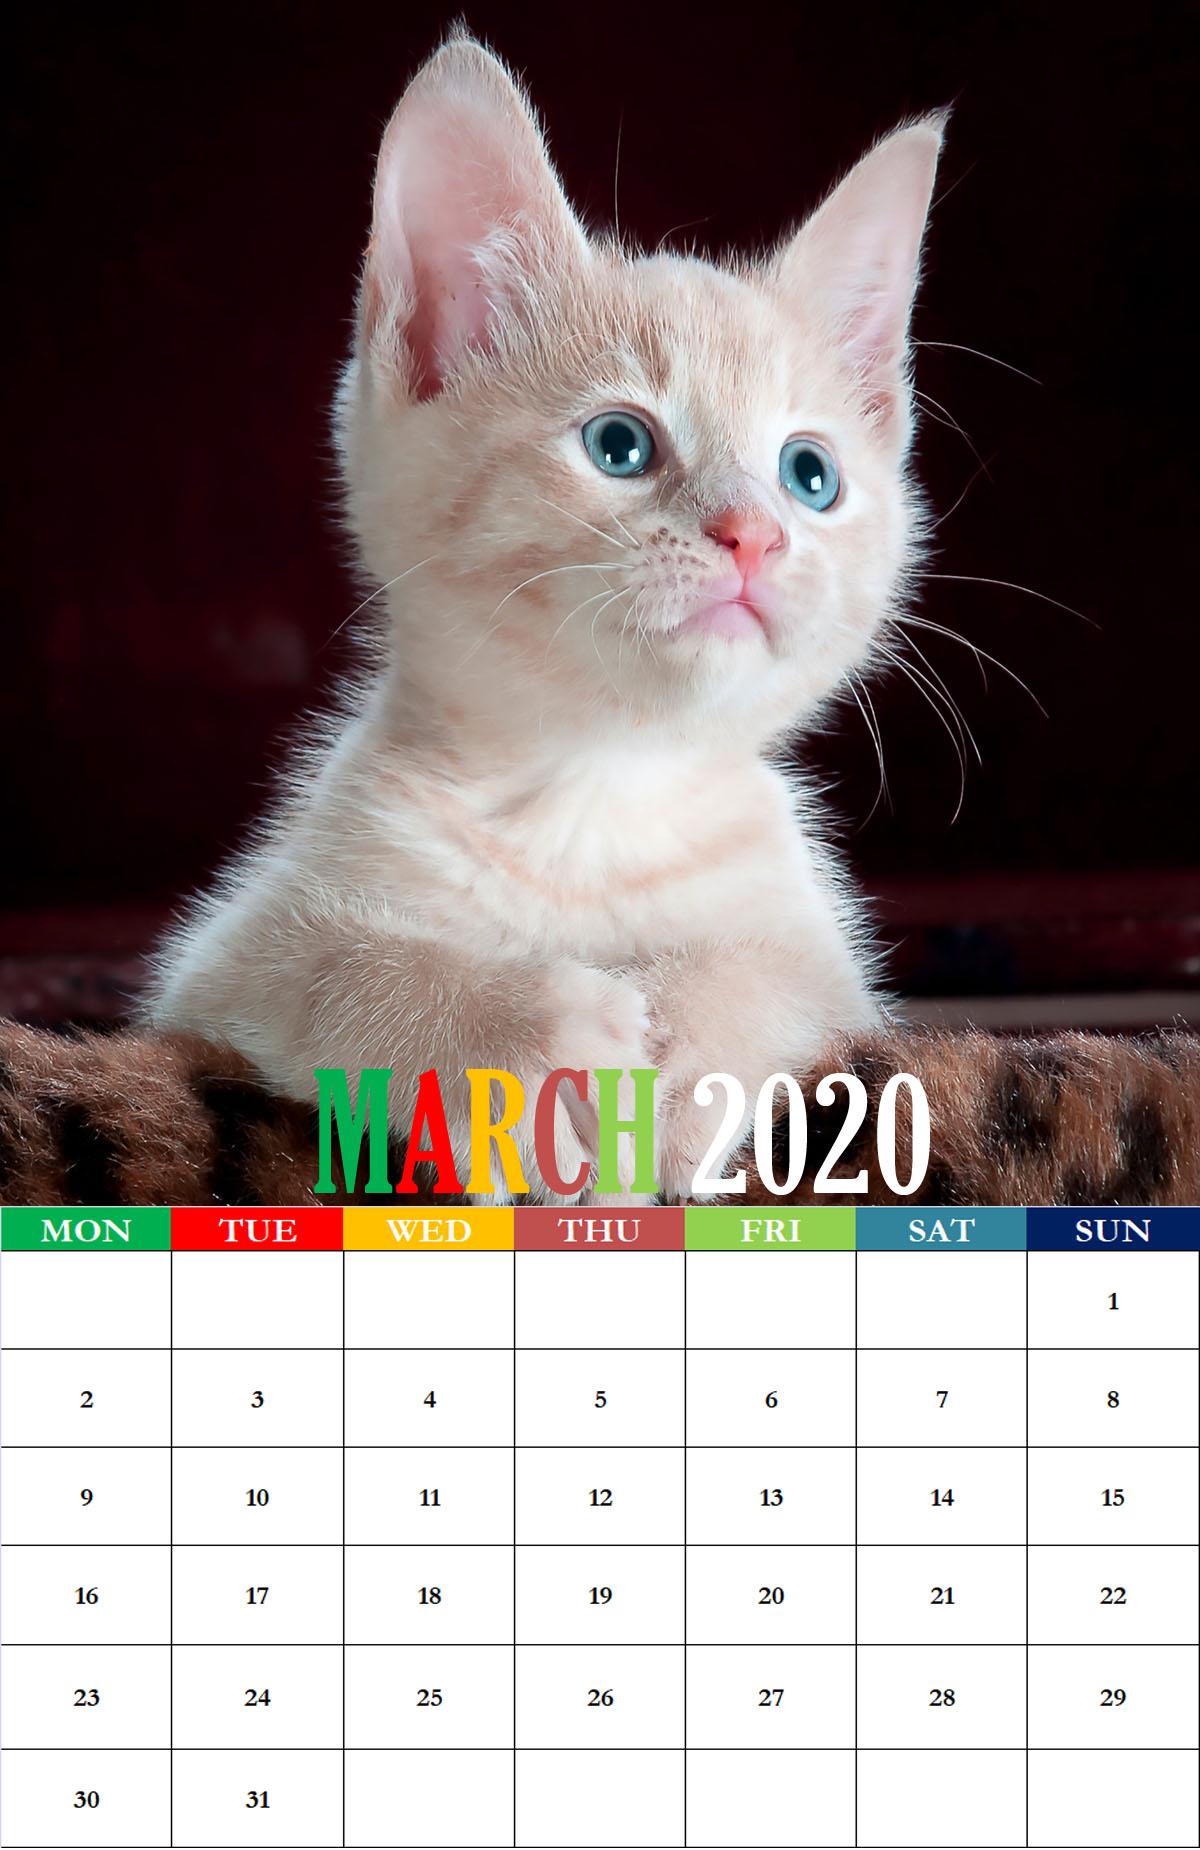 March Calendar Wallpaper For iPhone Desktop Mobile Tablets